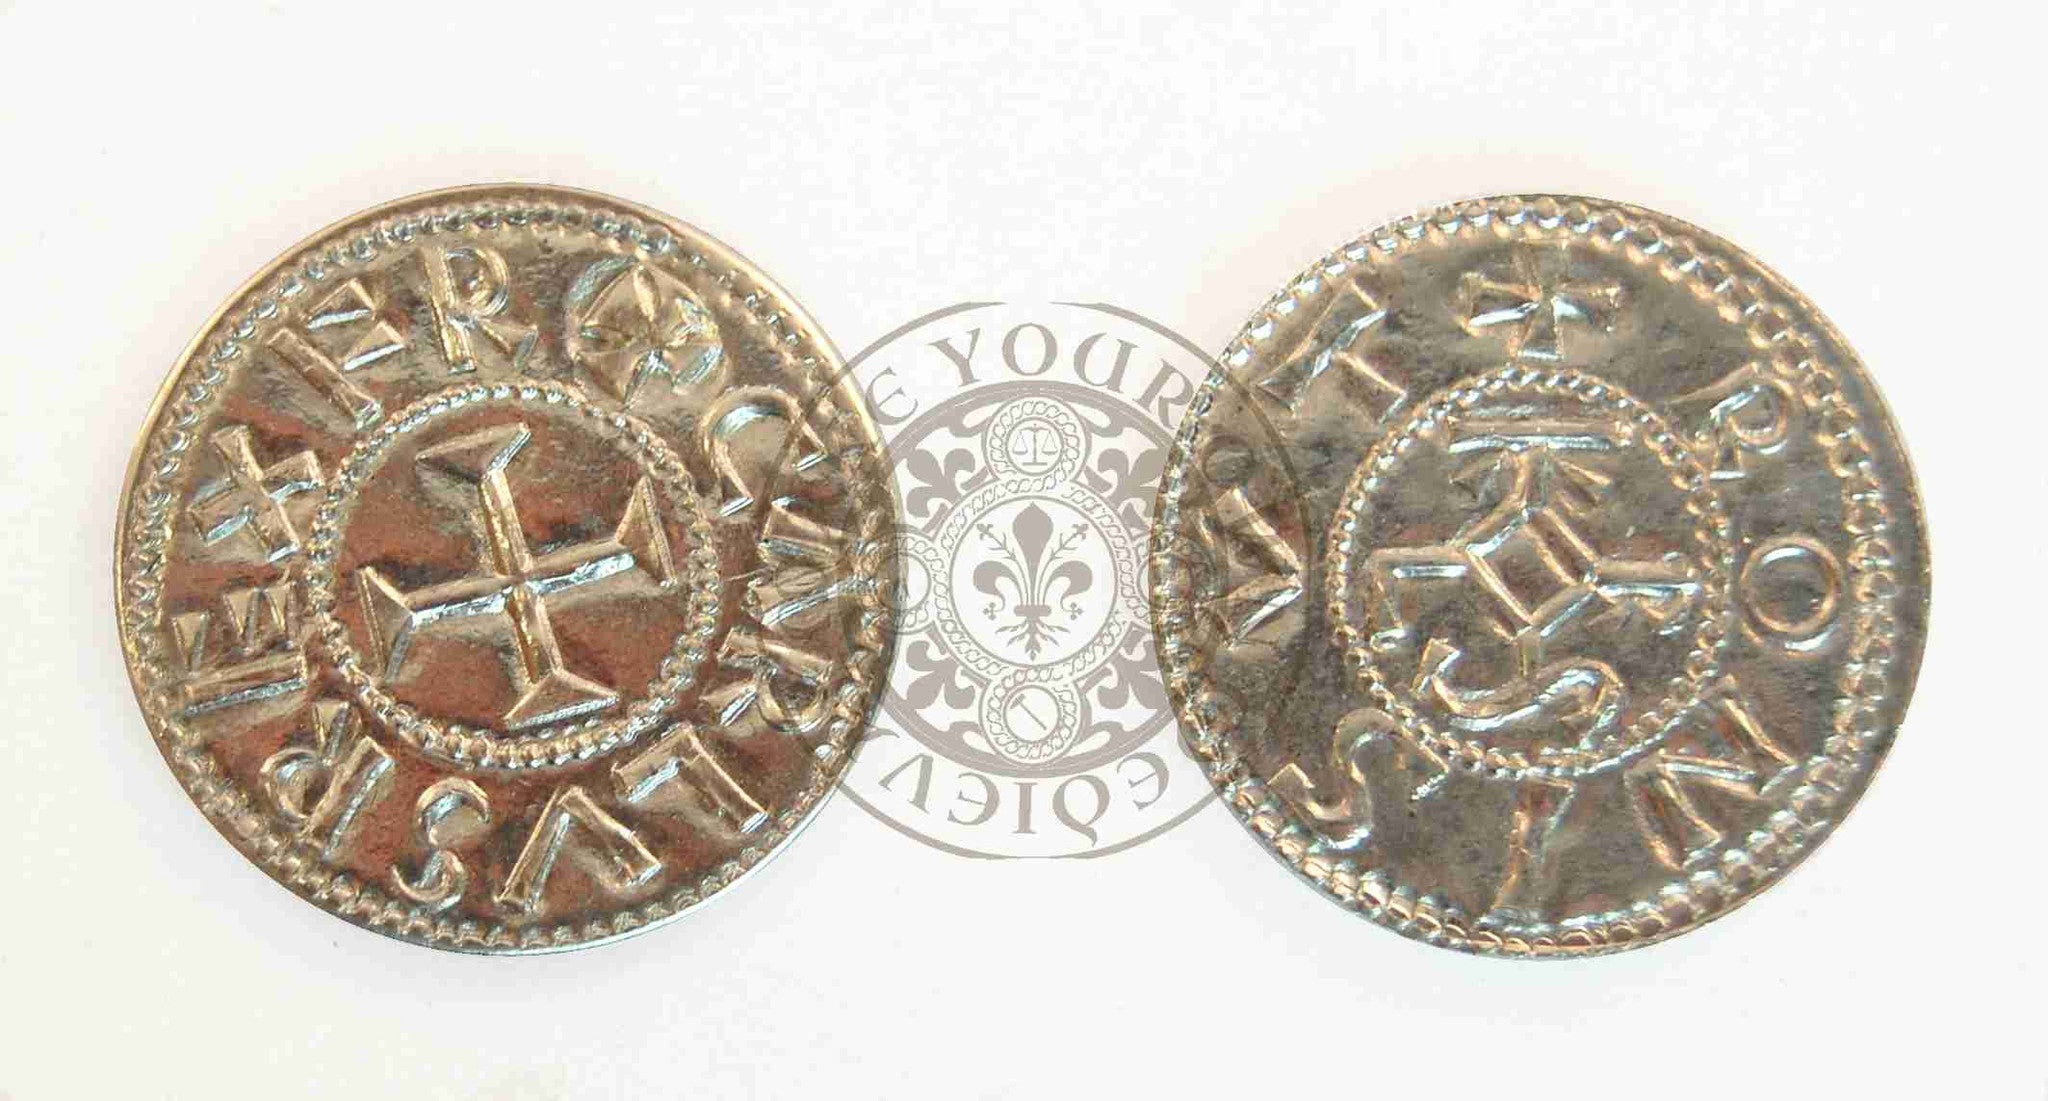 Charlemagne (Franks) Denier Coin Reproduction